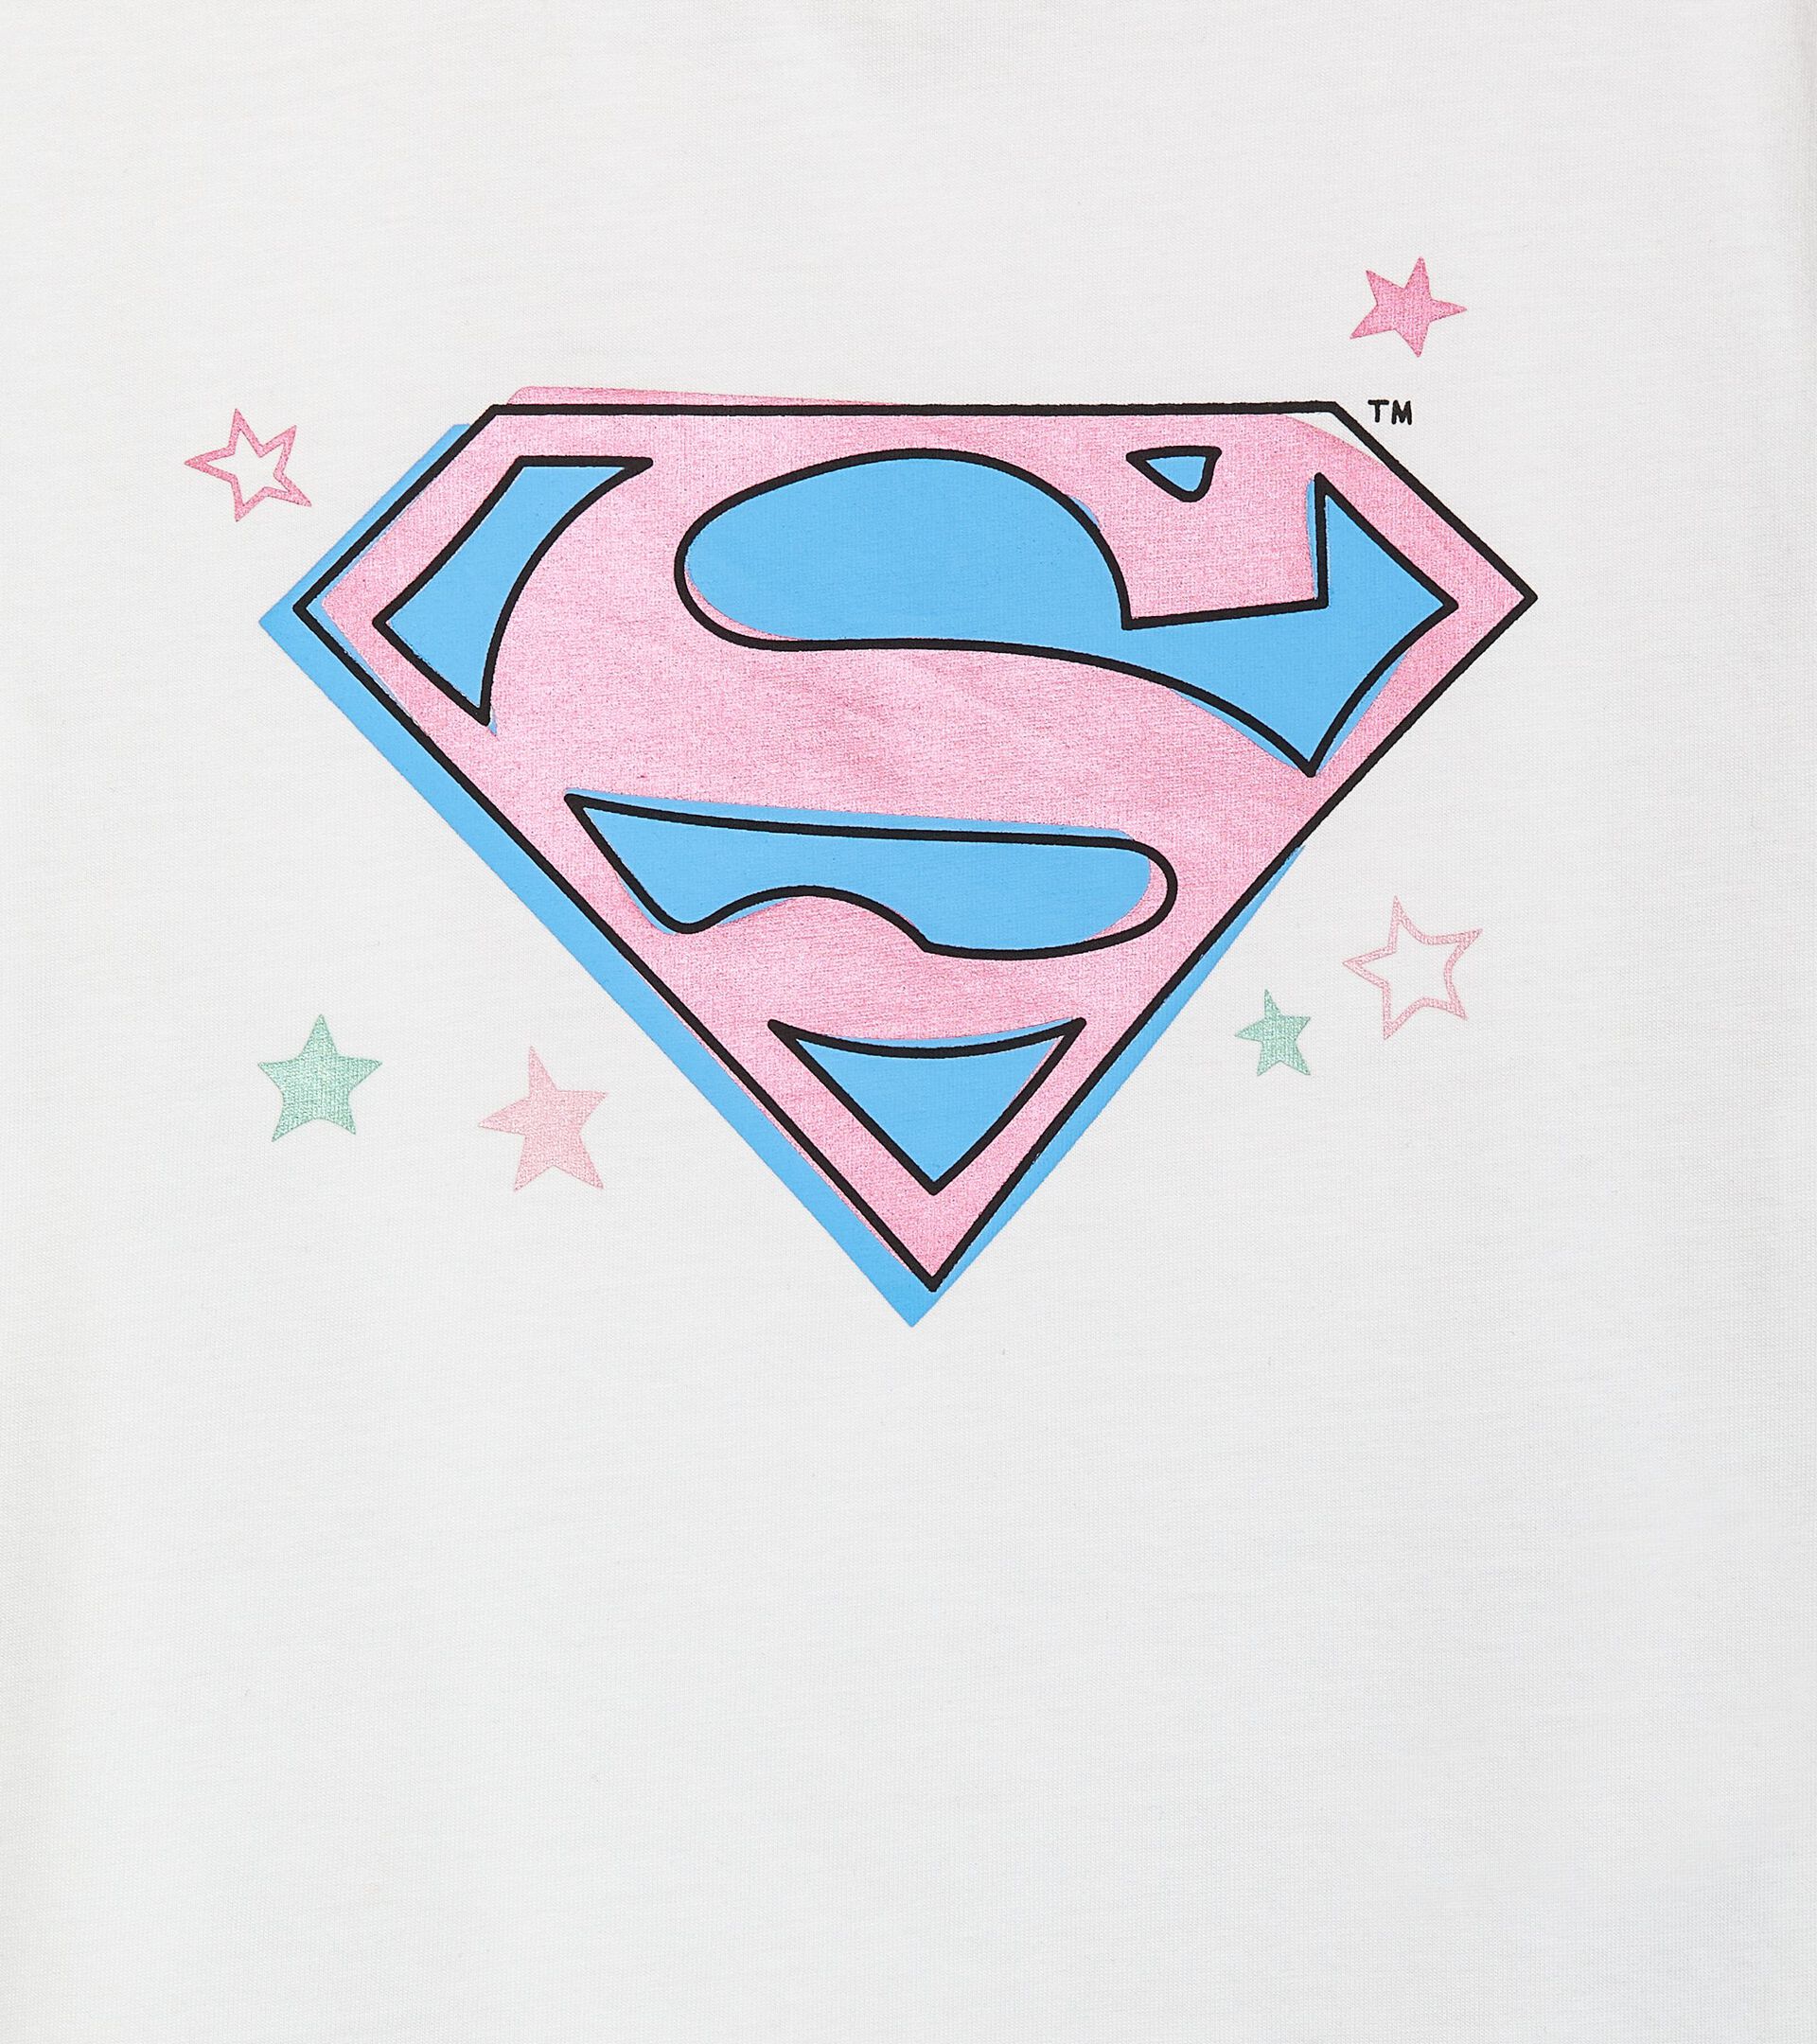 T-shirt super-héroïnes - Fille JG.T-SHIRT SS SUPERGIRL BLANC VIF - Diadora